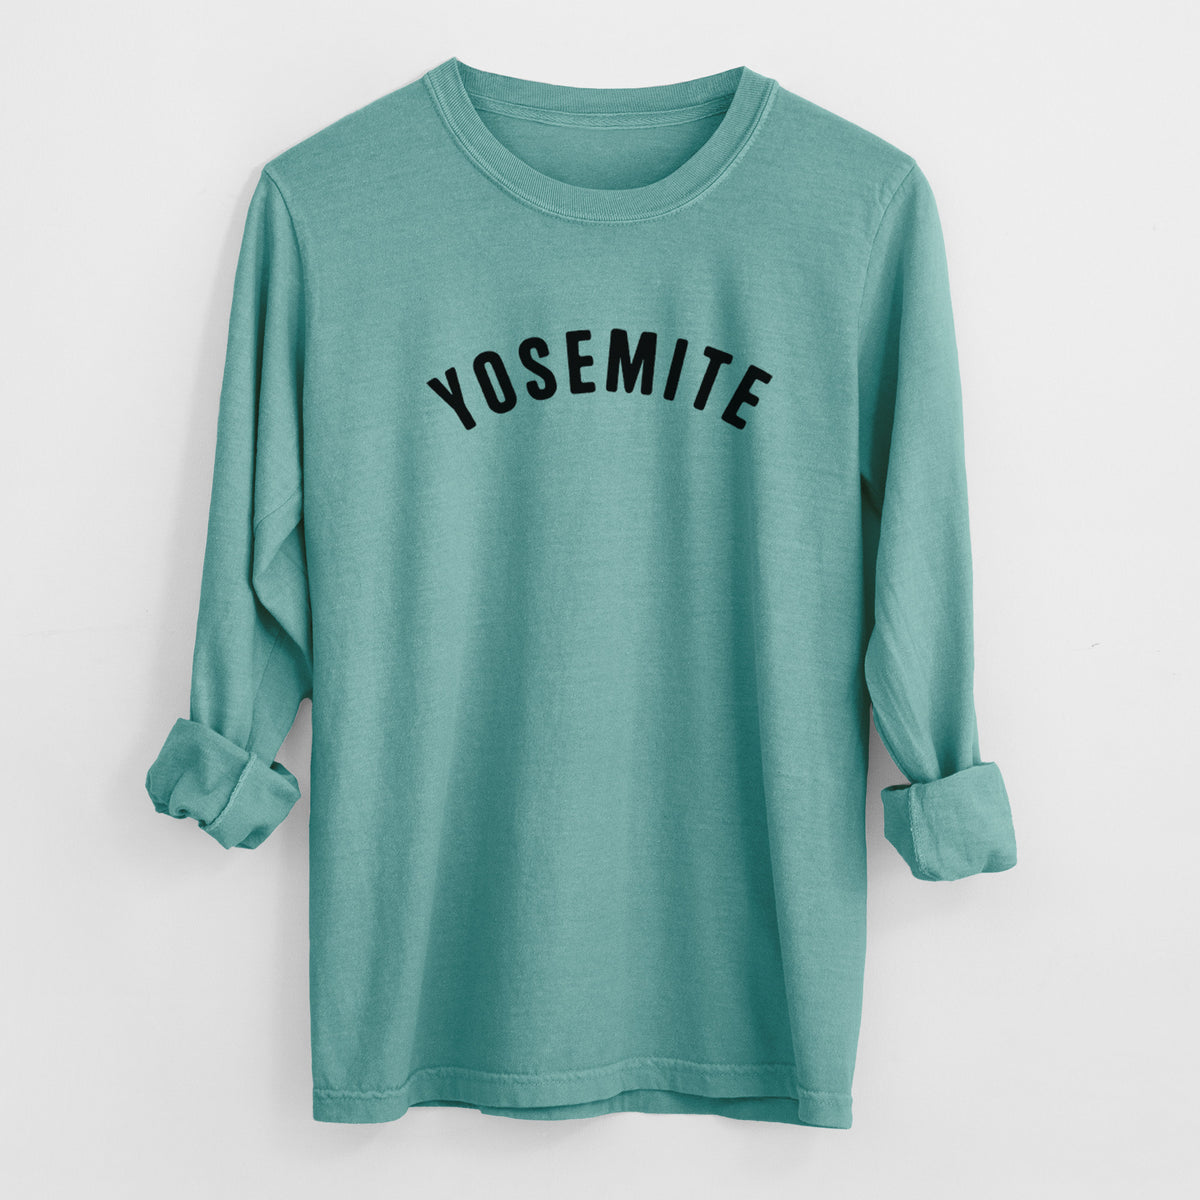 Yosemite - Heavyweight 100% Cotton Long Sleeve